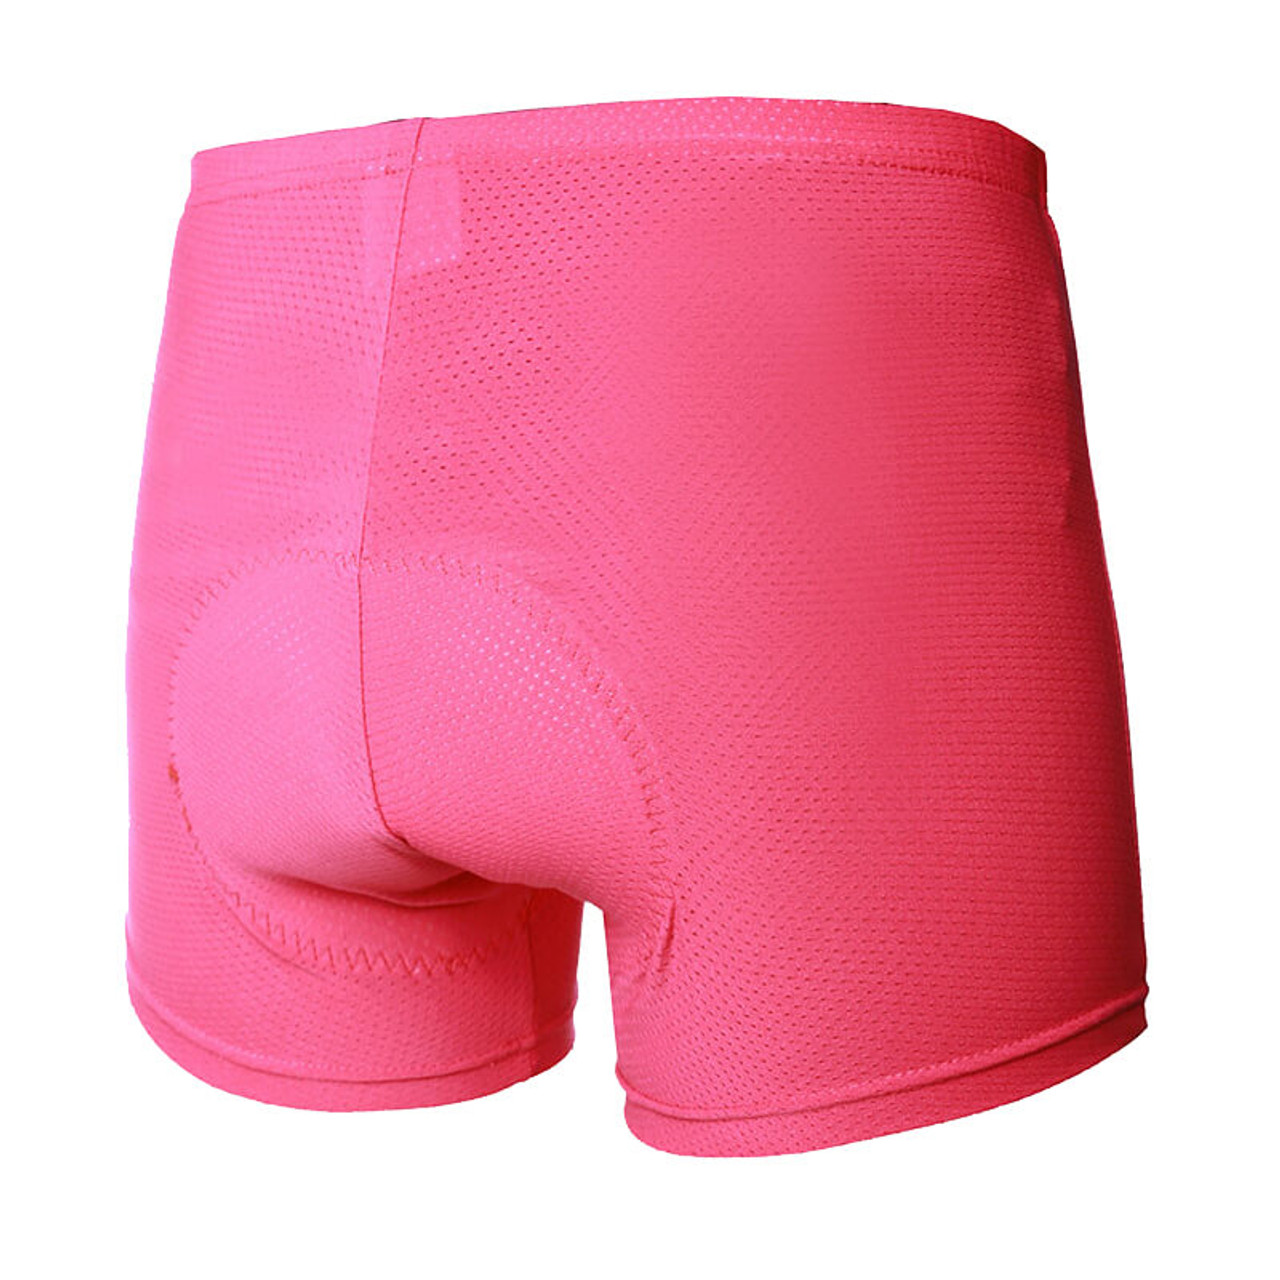 Cycling Undershorts / Cycling Underwear